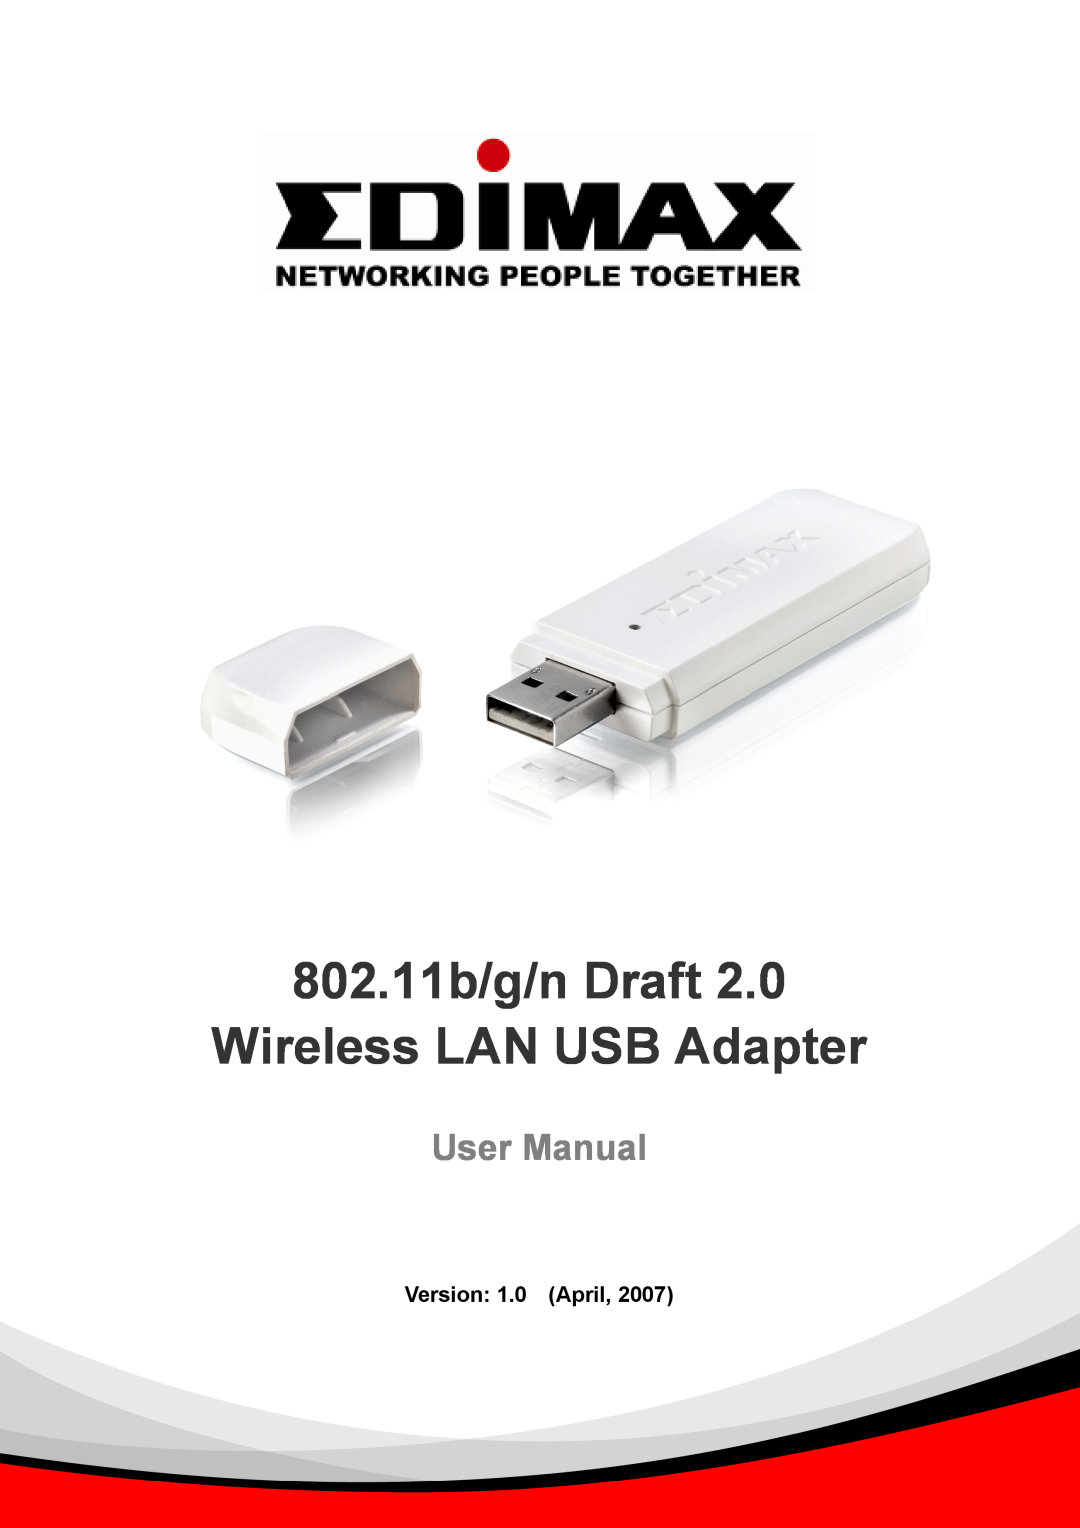 Edimax Technology user manual Version 1.0 April, 802.11b/g/n Draft Wireless LAN USB Adapter, User Manual 